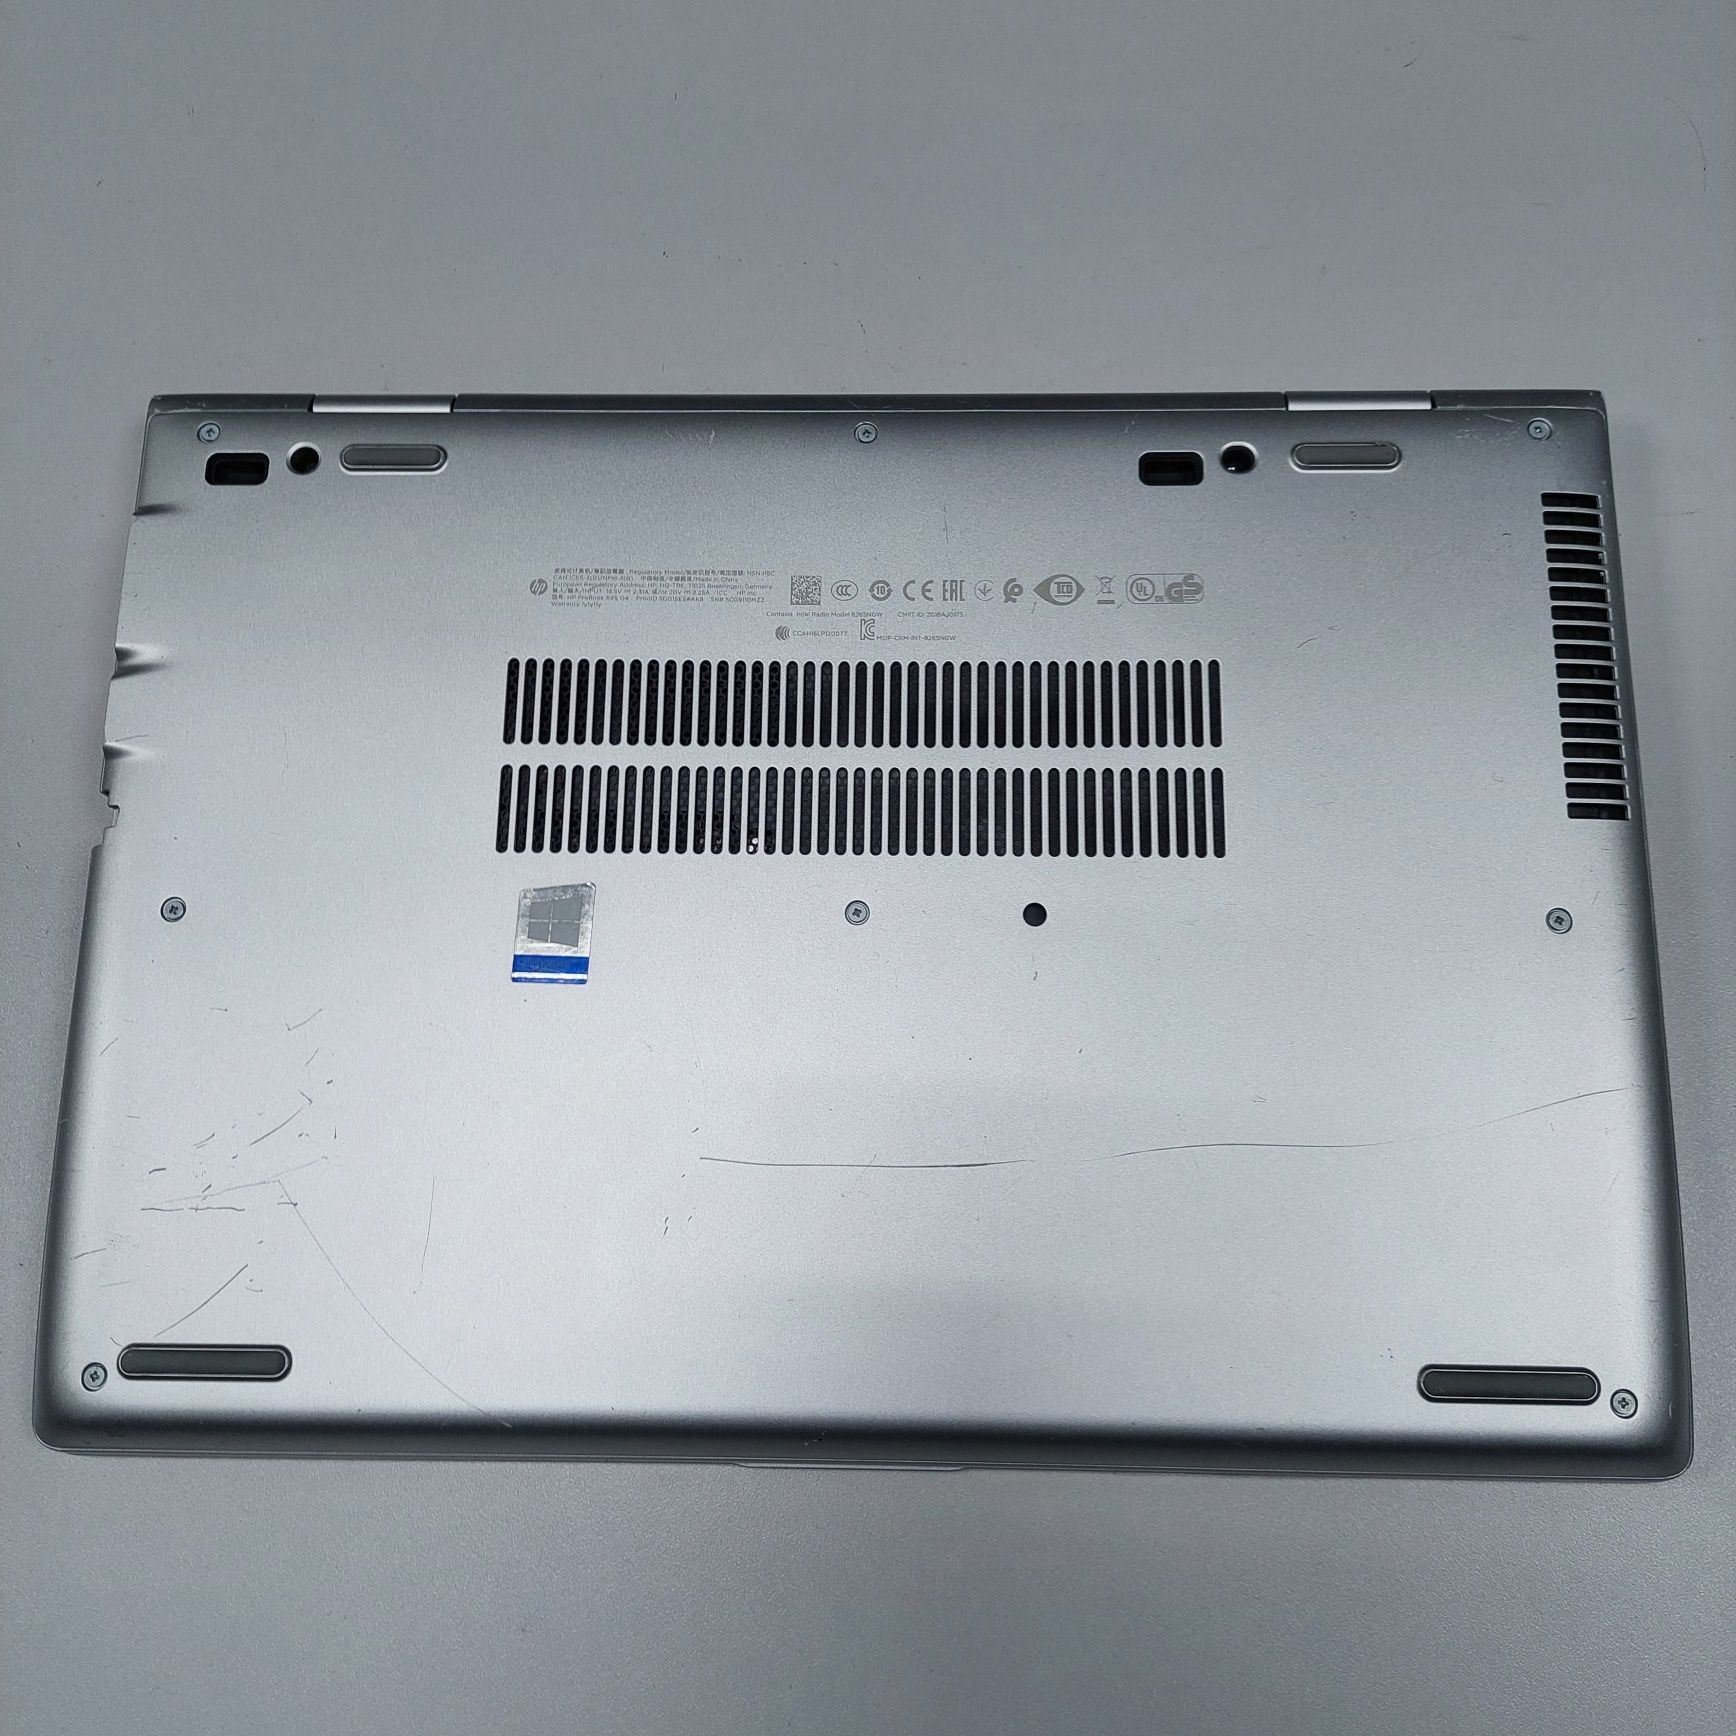 HP ProBook 645 G4 14FullHD Ryzen 5 2500u 8GB DDR4 256ssd+320gb Vega 8